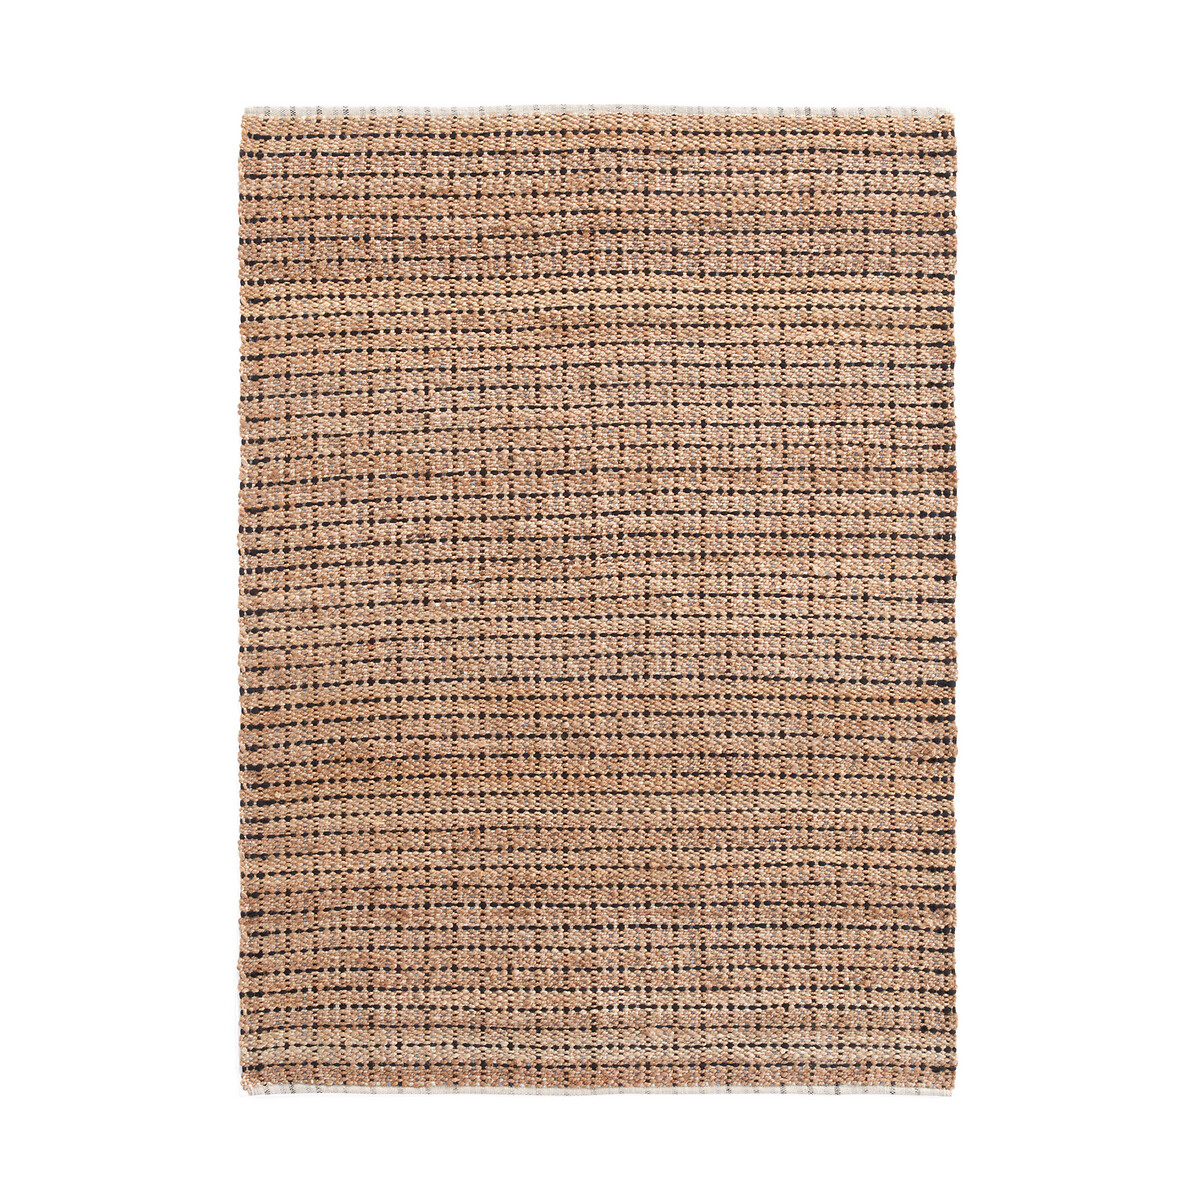 Ковер LaRedoute Ручное плетение Chaffa 120 x 180 см другие, размер 120 x 180 см - фото 1